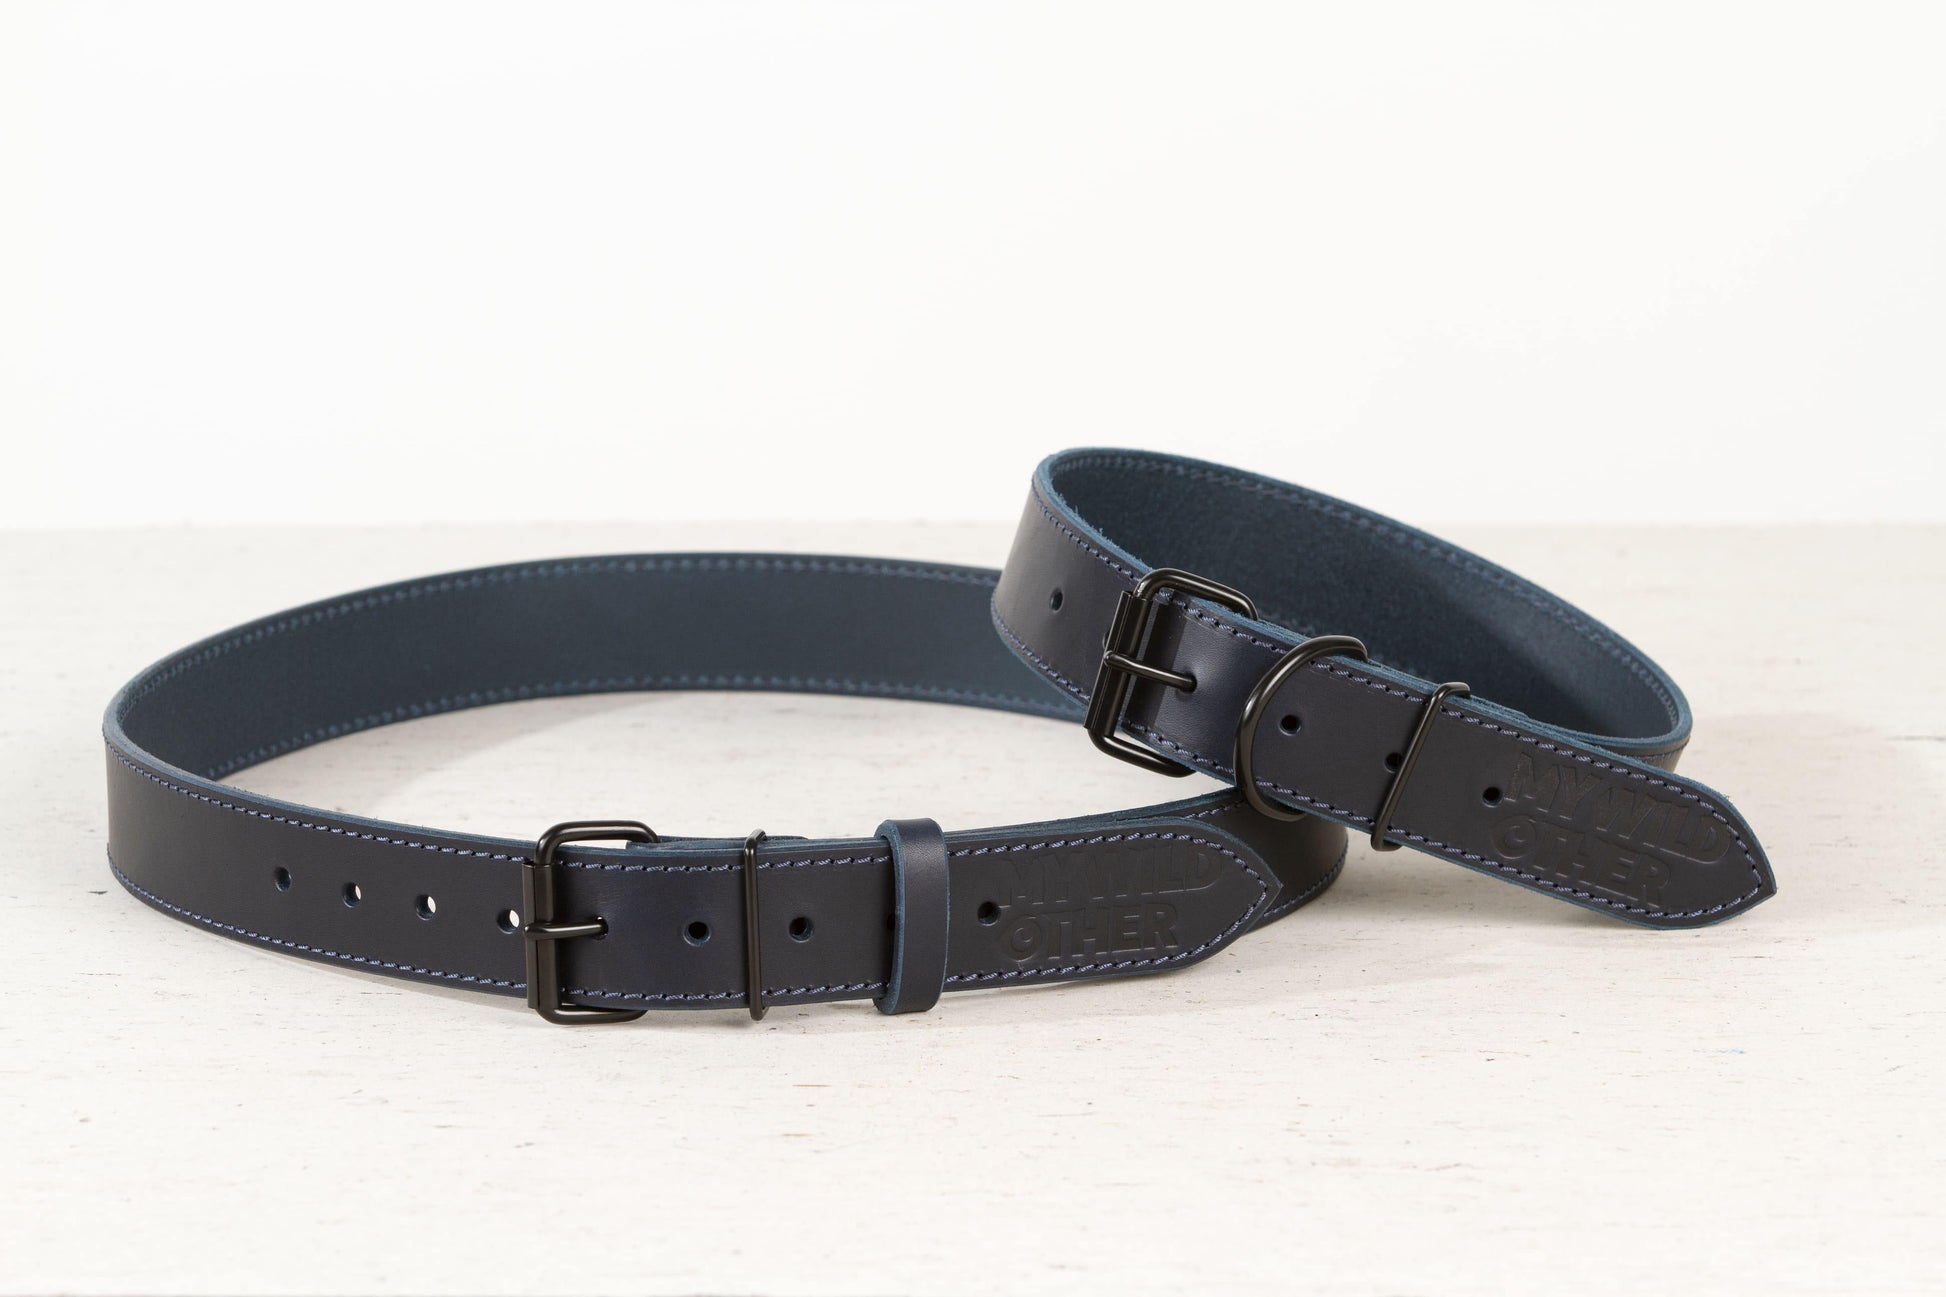 Handmade blue leather dog collar - premium dog goods handmade in Europe by My Wild Other